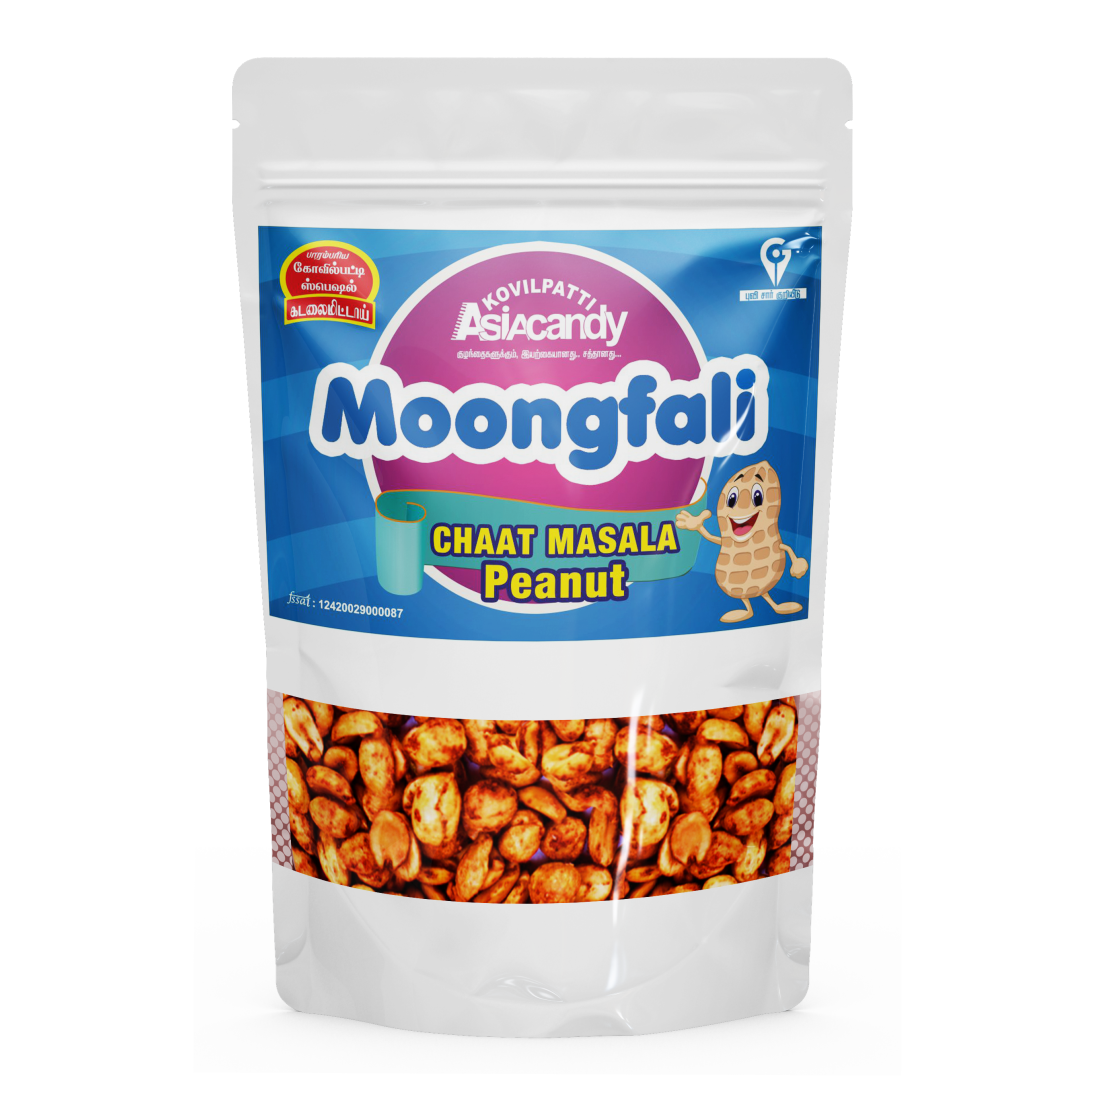 80 gm moongfali chaat masala peanut